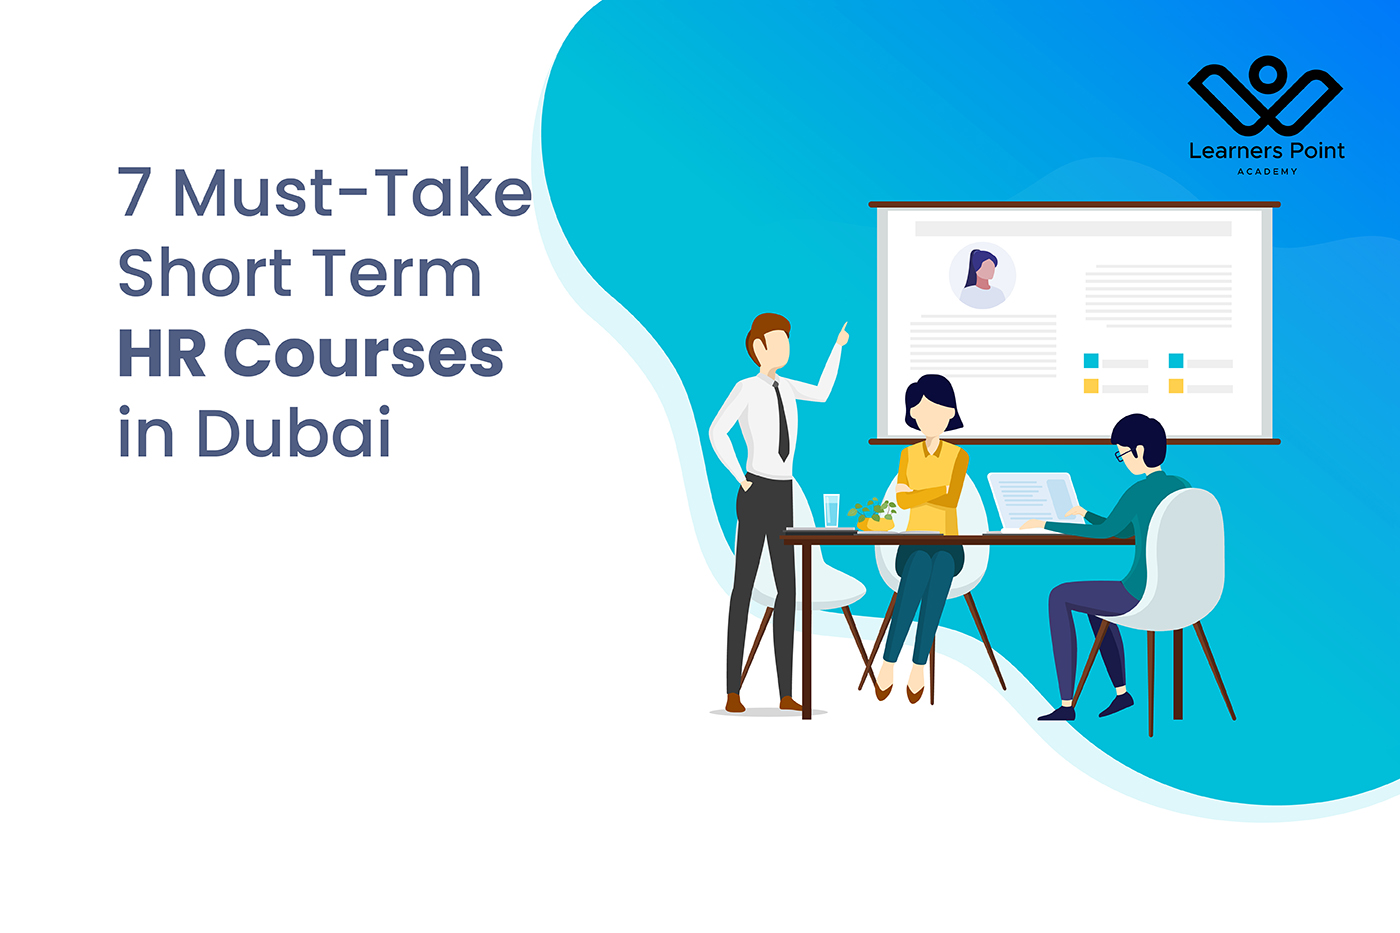 7 Must-Take Short Term HR Courses in Dubai